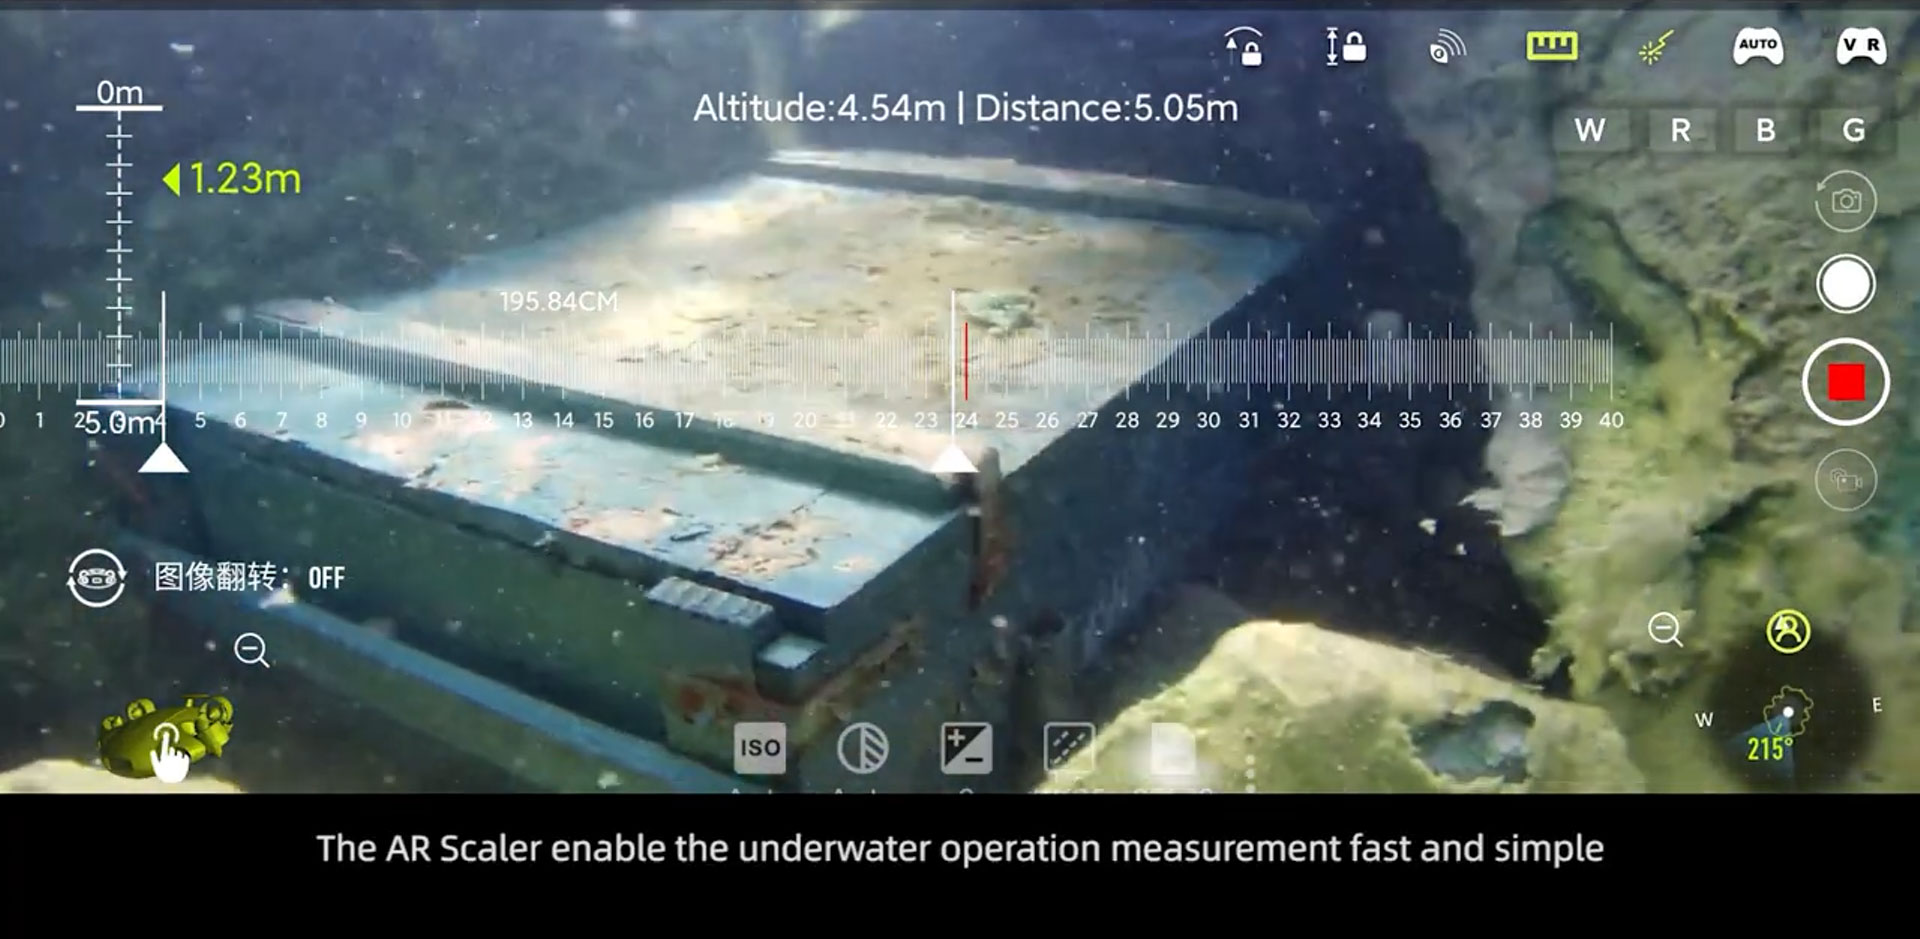 fifish-v6-plus-ar-scaler-underwater-drone.jpg